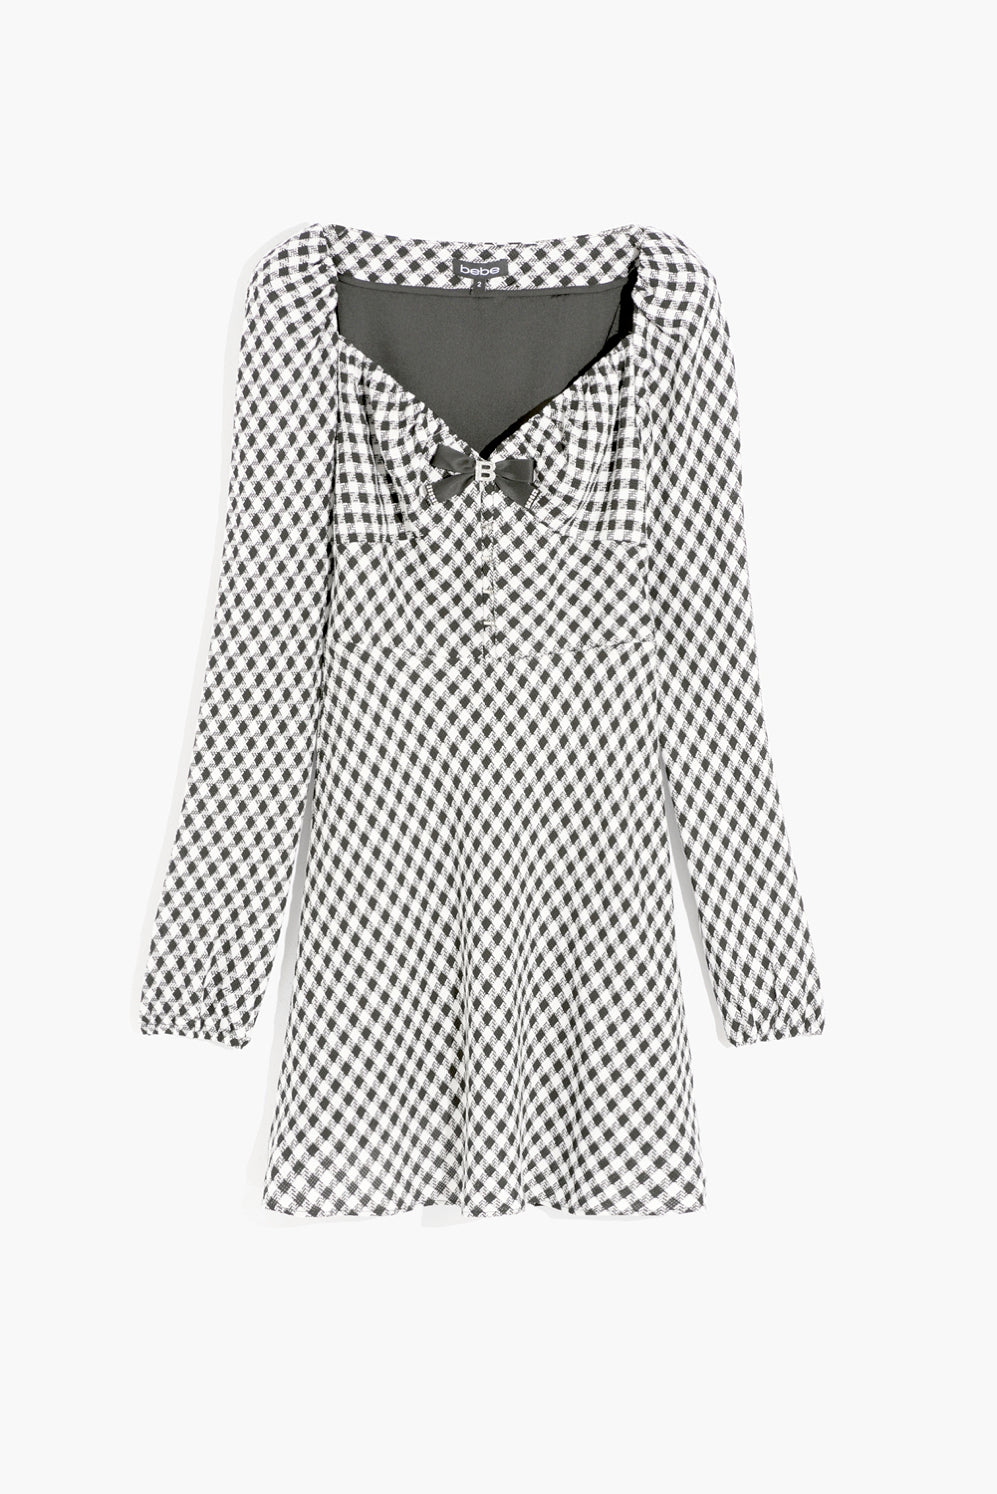 Black And White Long Sleeve Checkered Short Dress